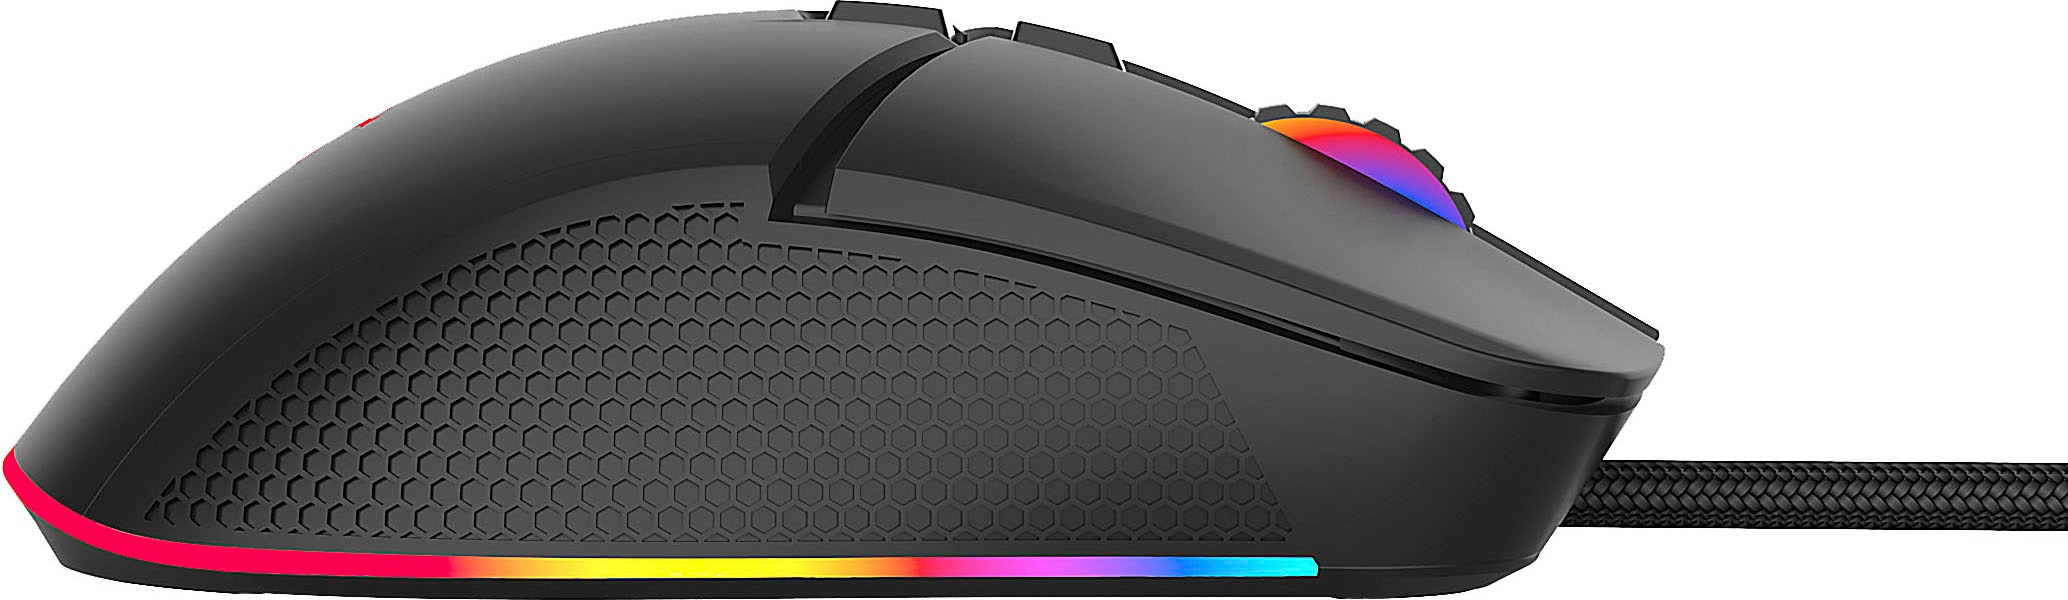 Hyrican Gaming-Maus »Stiker Gaming-Maus, RGB LED Beleuchtung, USB,  kabelgebunden« online bestellen | UNIVERSAL